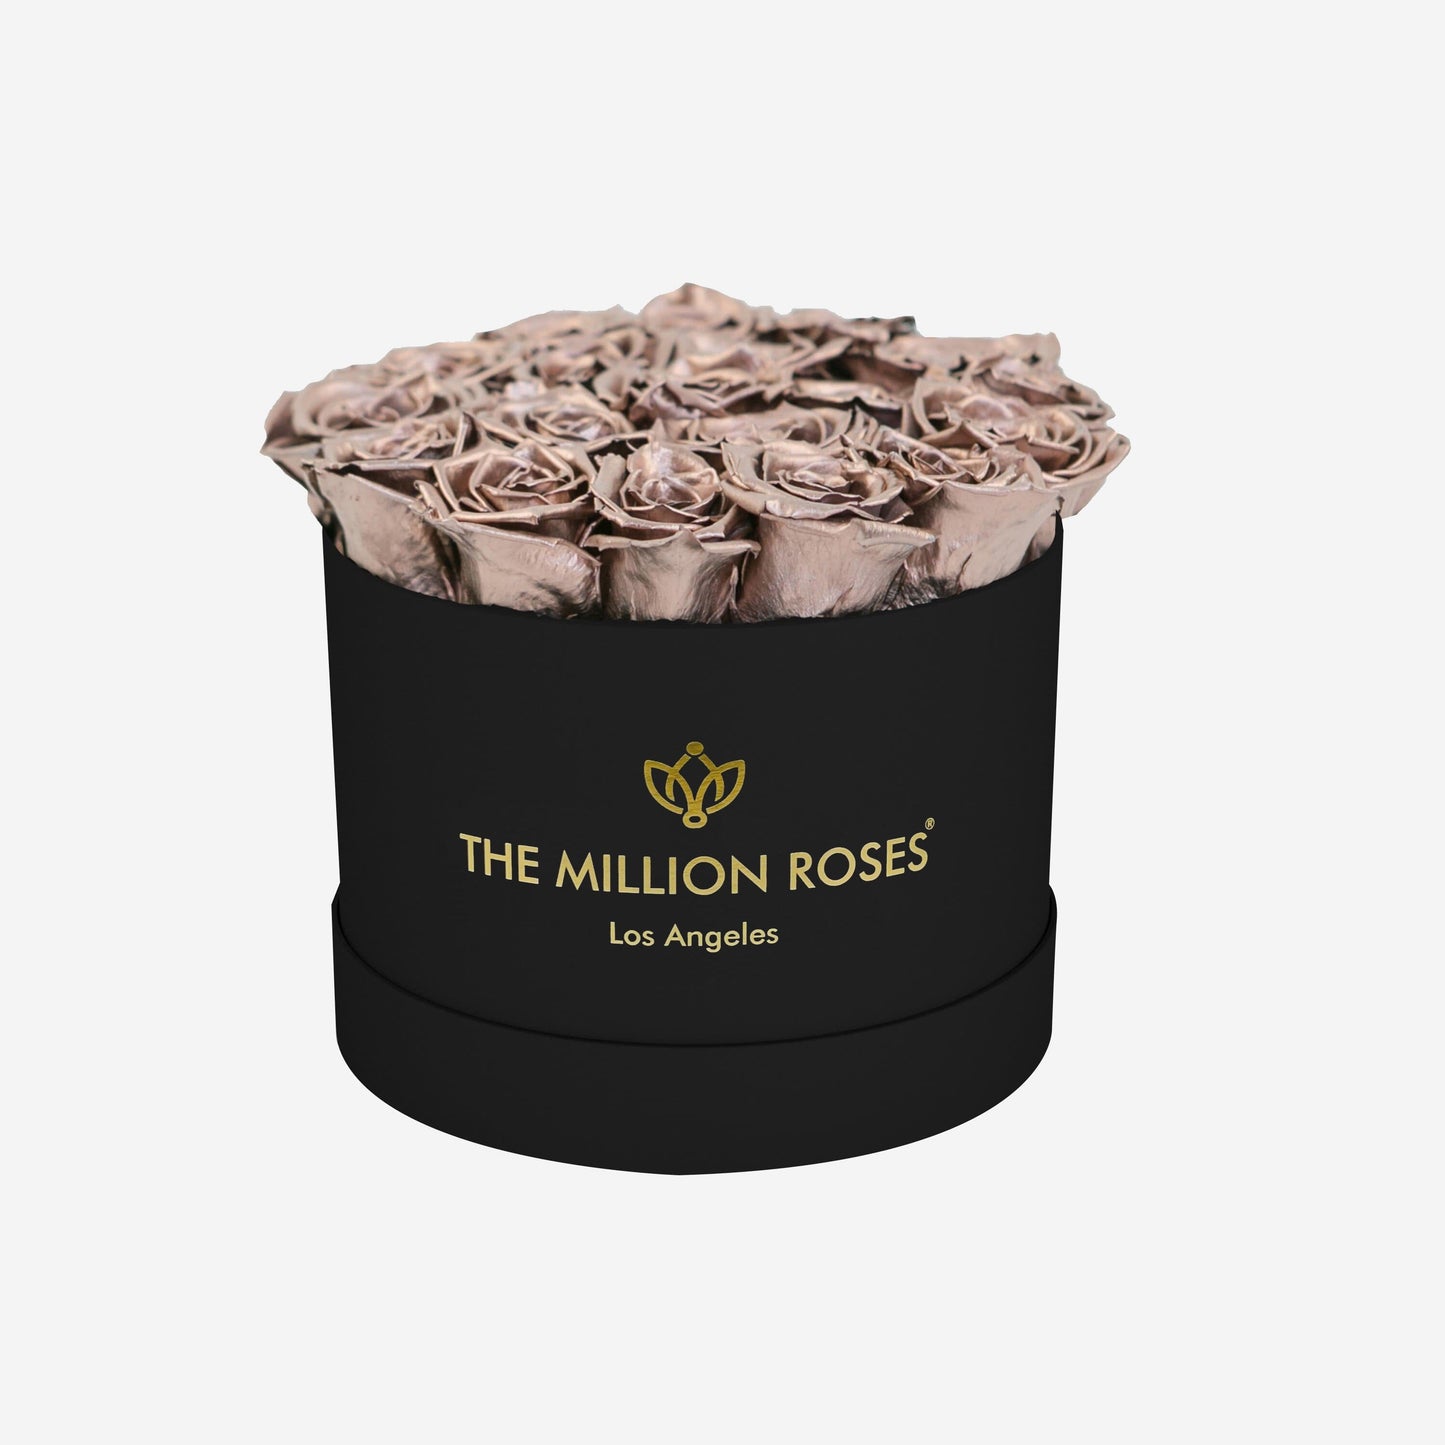 Classic Black Box | Rose Gold Roses - The Million Roses